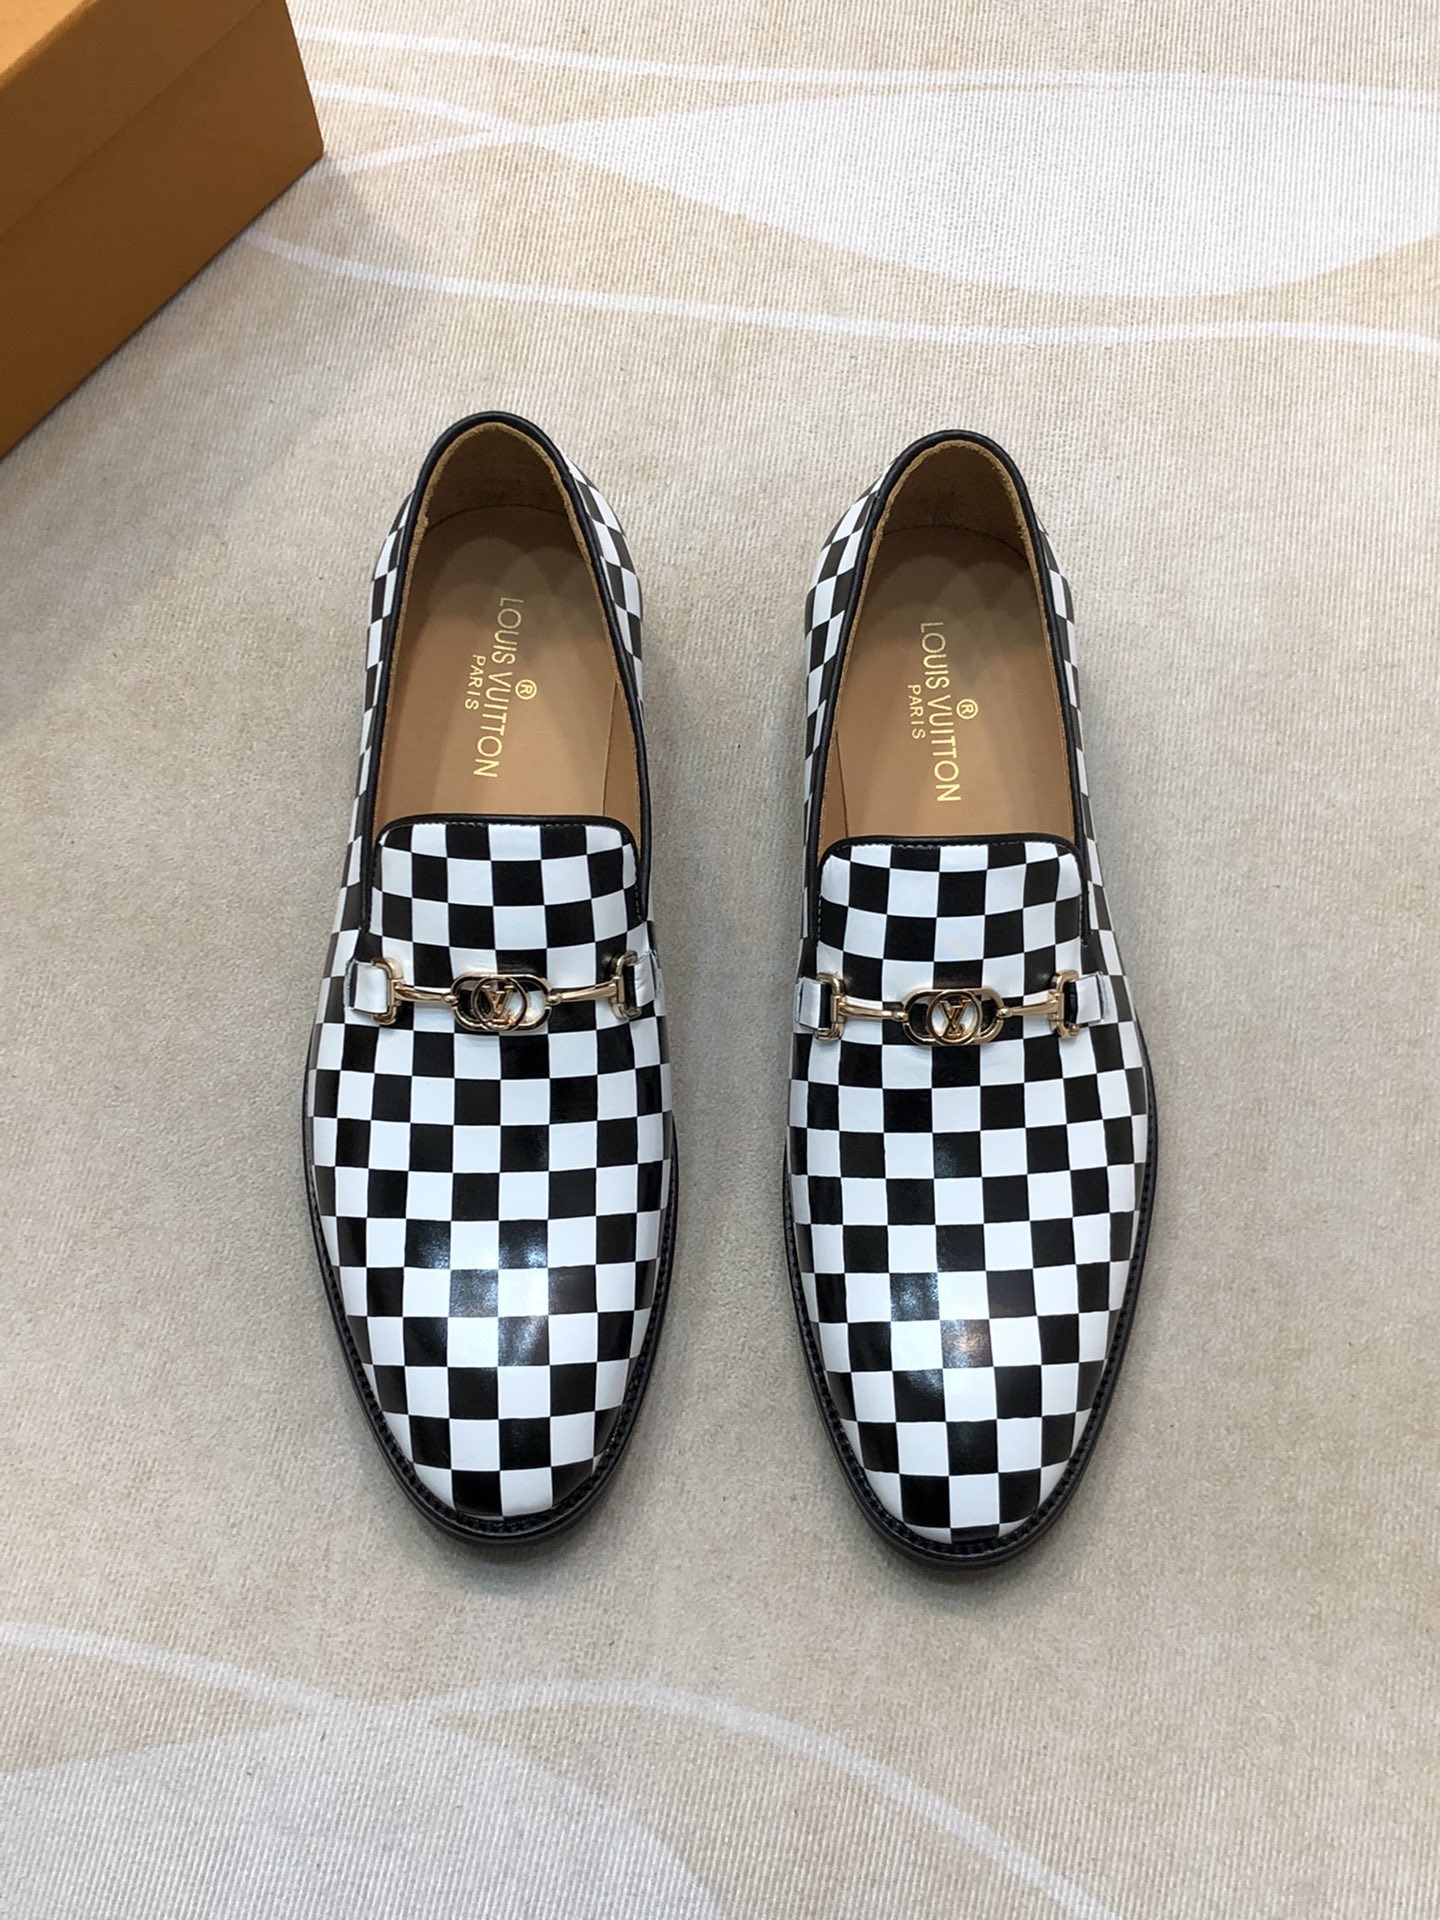 Louis Vuitton Shoes Plain Toe Cowhide Genuine Leather Casual